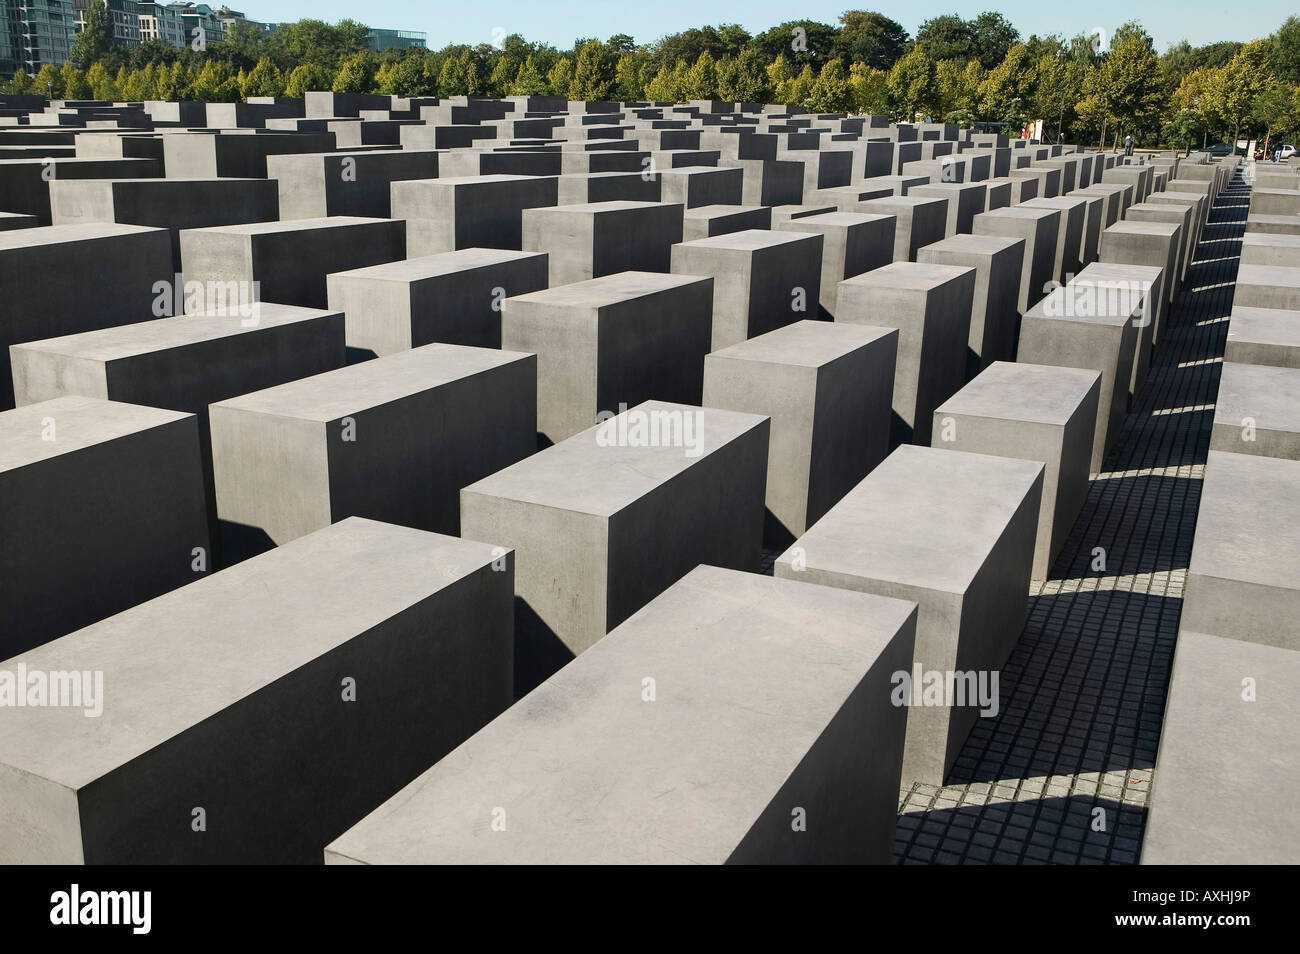 Jewish Holocaust monument in Berlin Germany Europe architecture stone grey modern cubicle symbol pattern war cube geometric Stock Photo